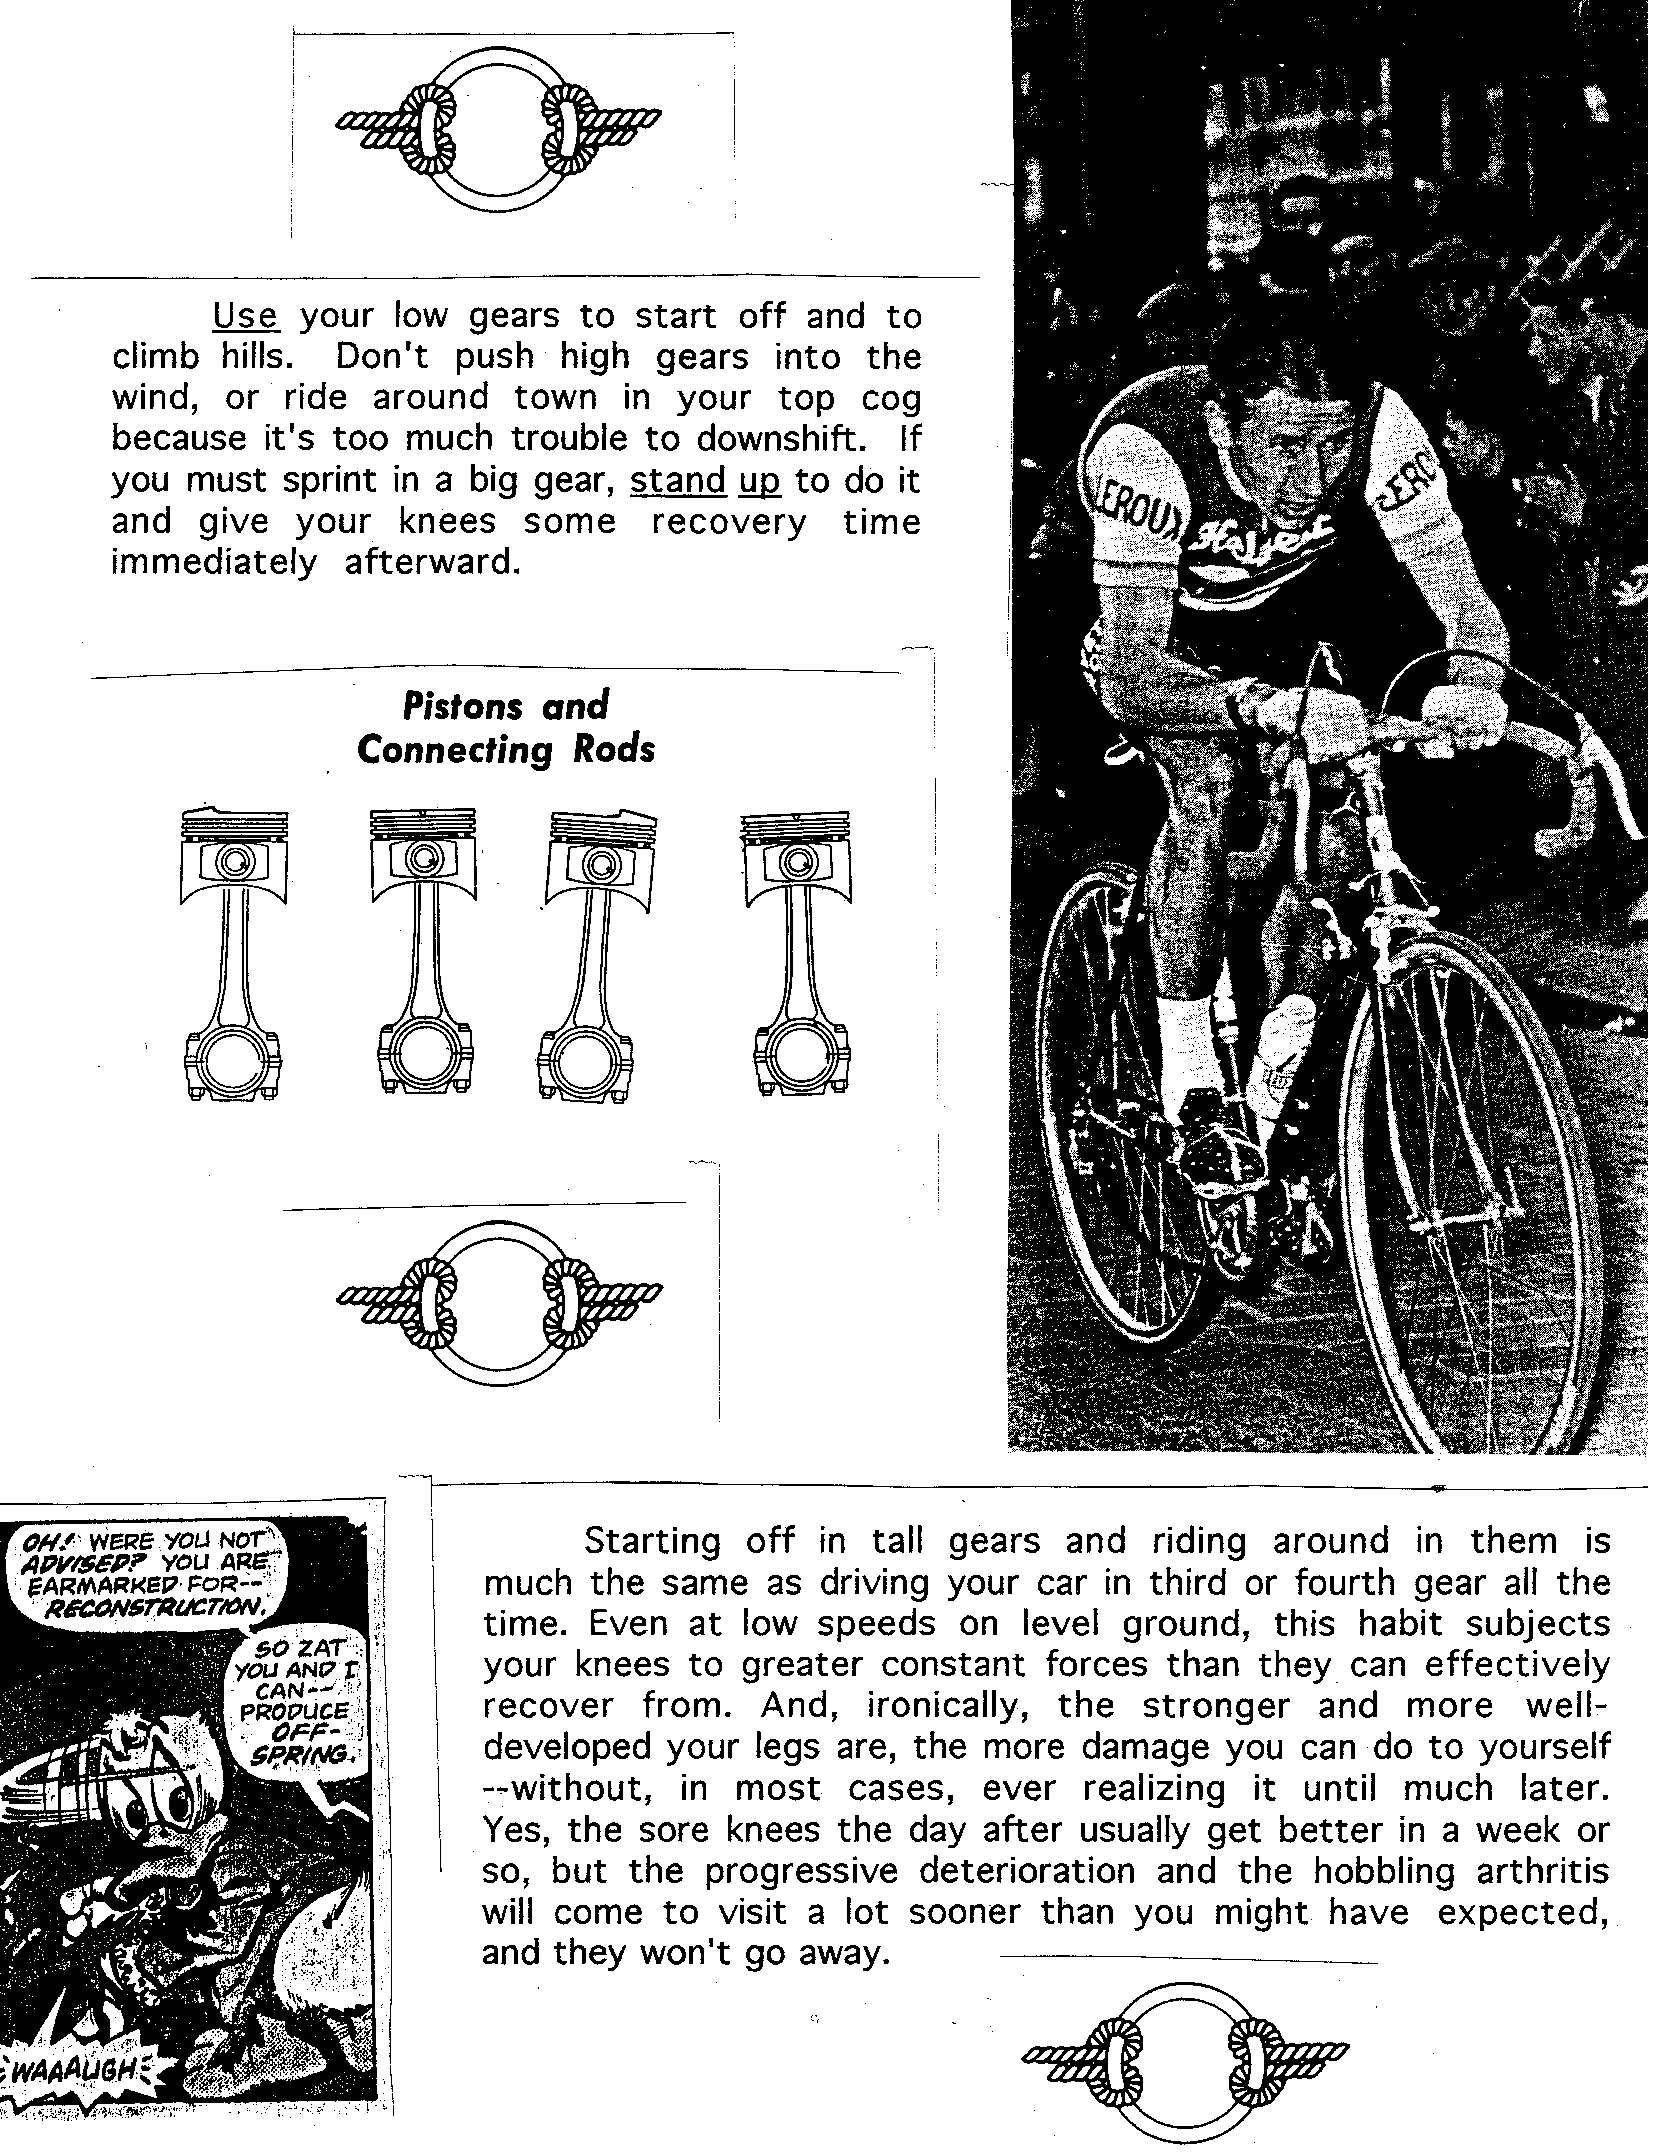 15 Compton Bicycle ABC - K2.jpg